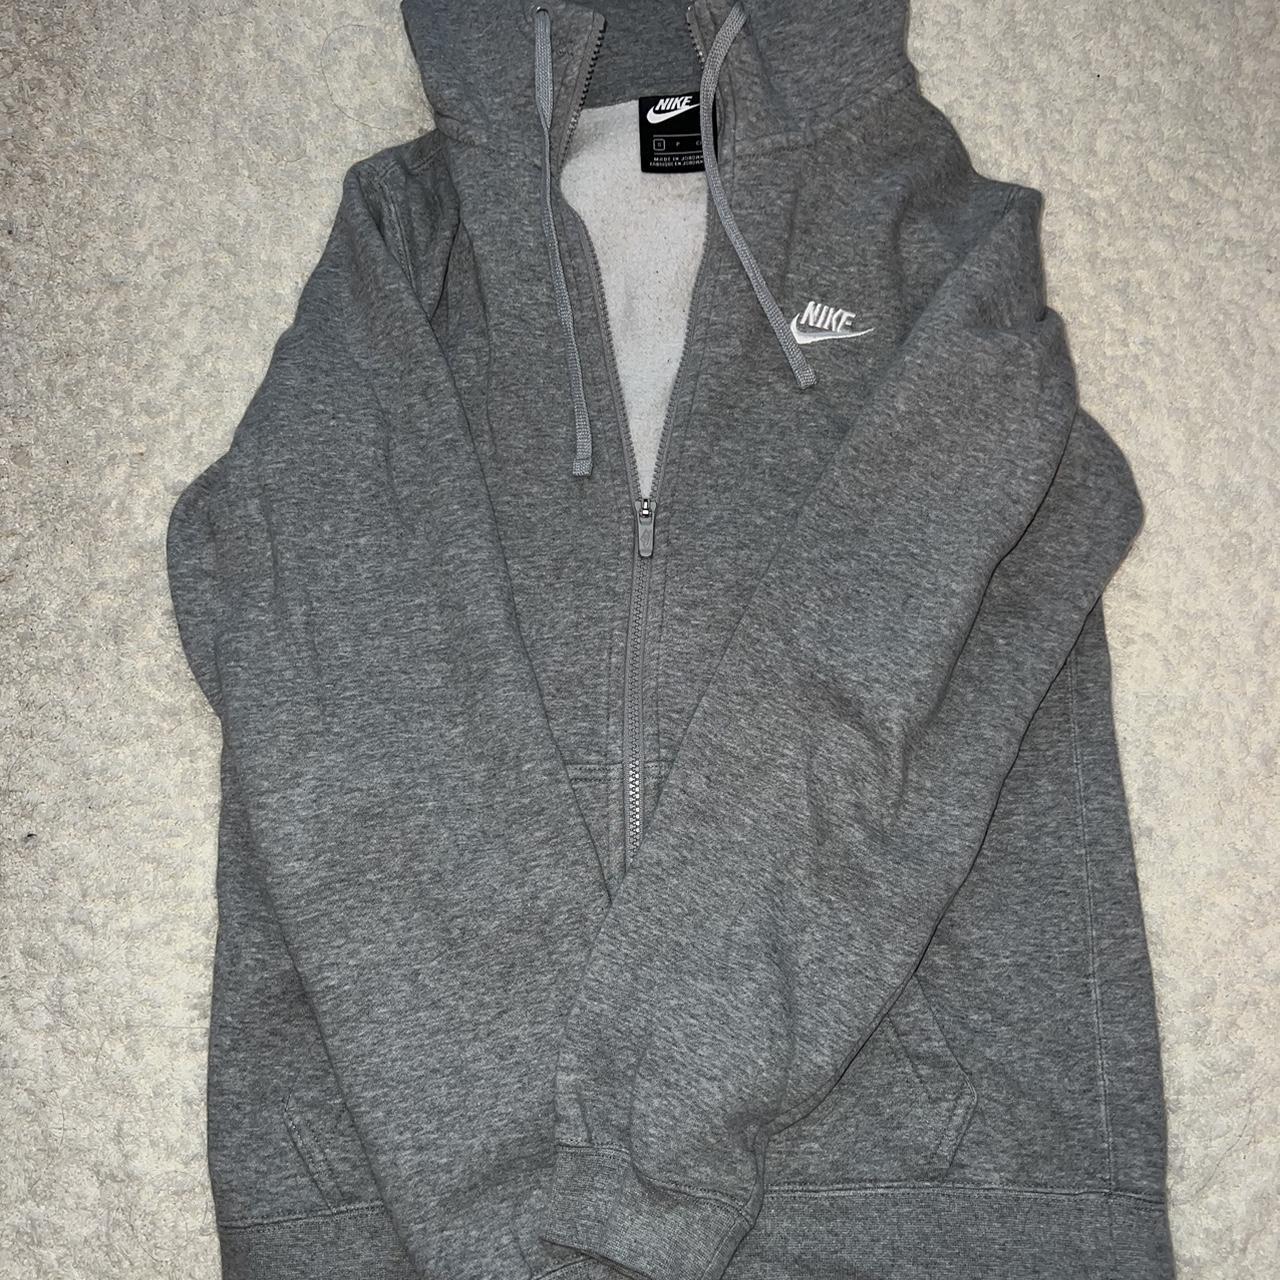 -Nike grey zip up -Size S (men’s) #Nike #Sweater - Depop